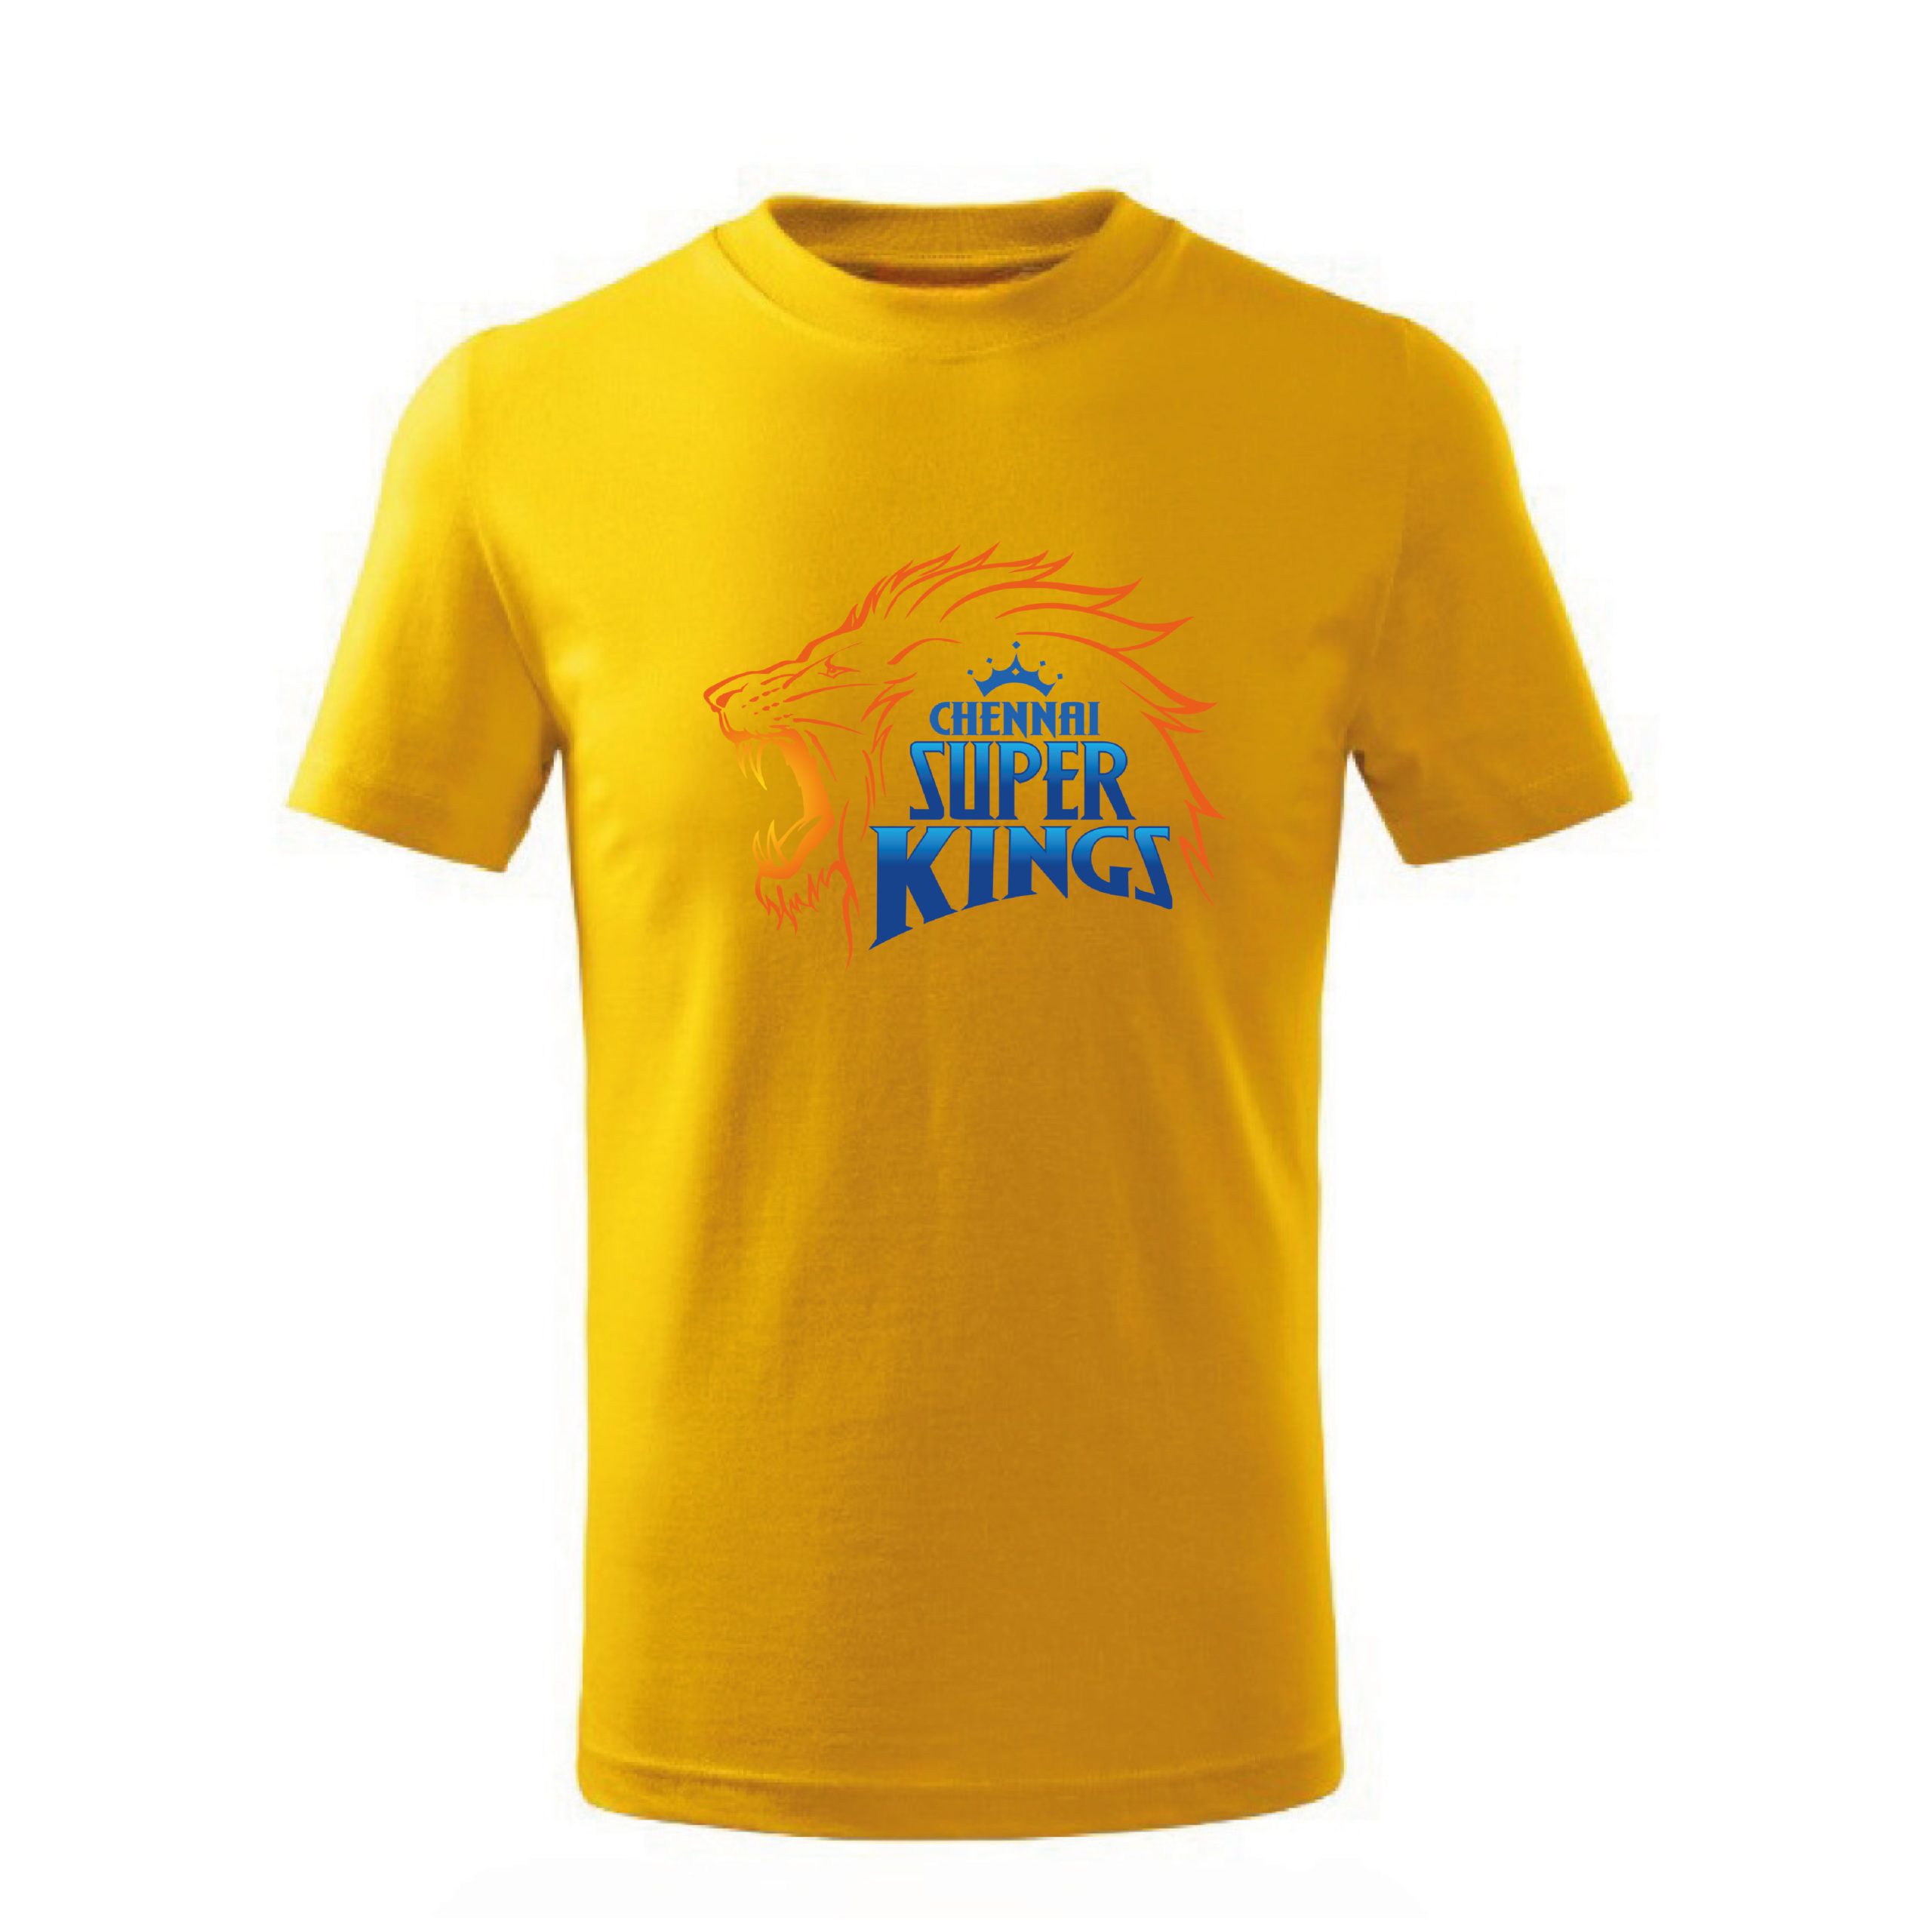 IPL T-shirt for CSK (Chennai Super Kings)